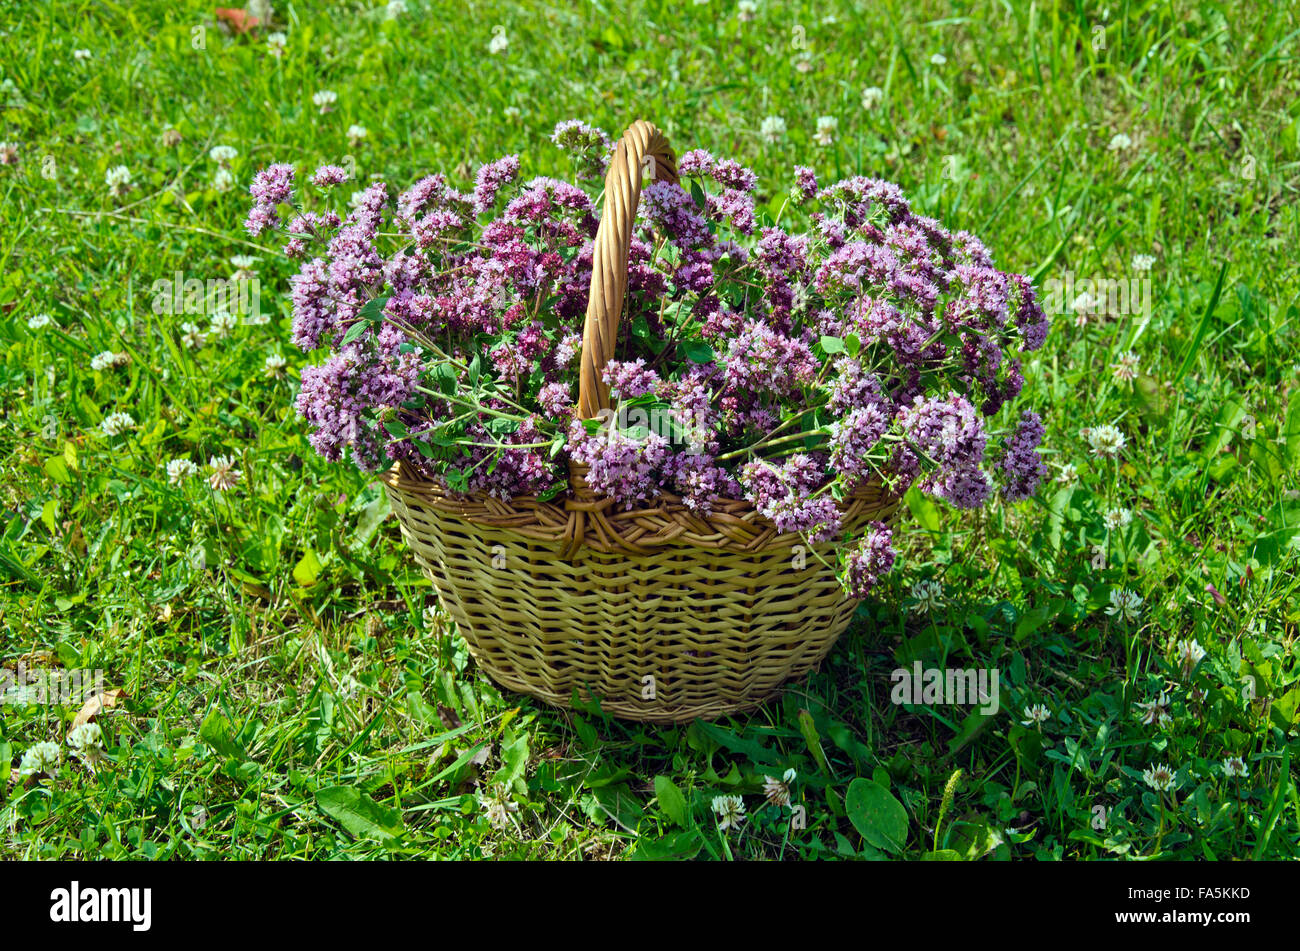 Oreganum wild marjoram herbs in wicker basket placed in meadow on sunny day Stock Photo